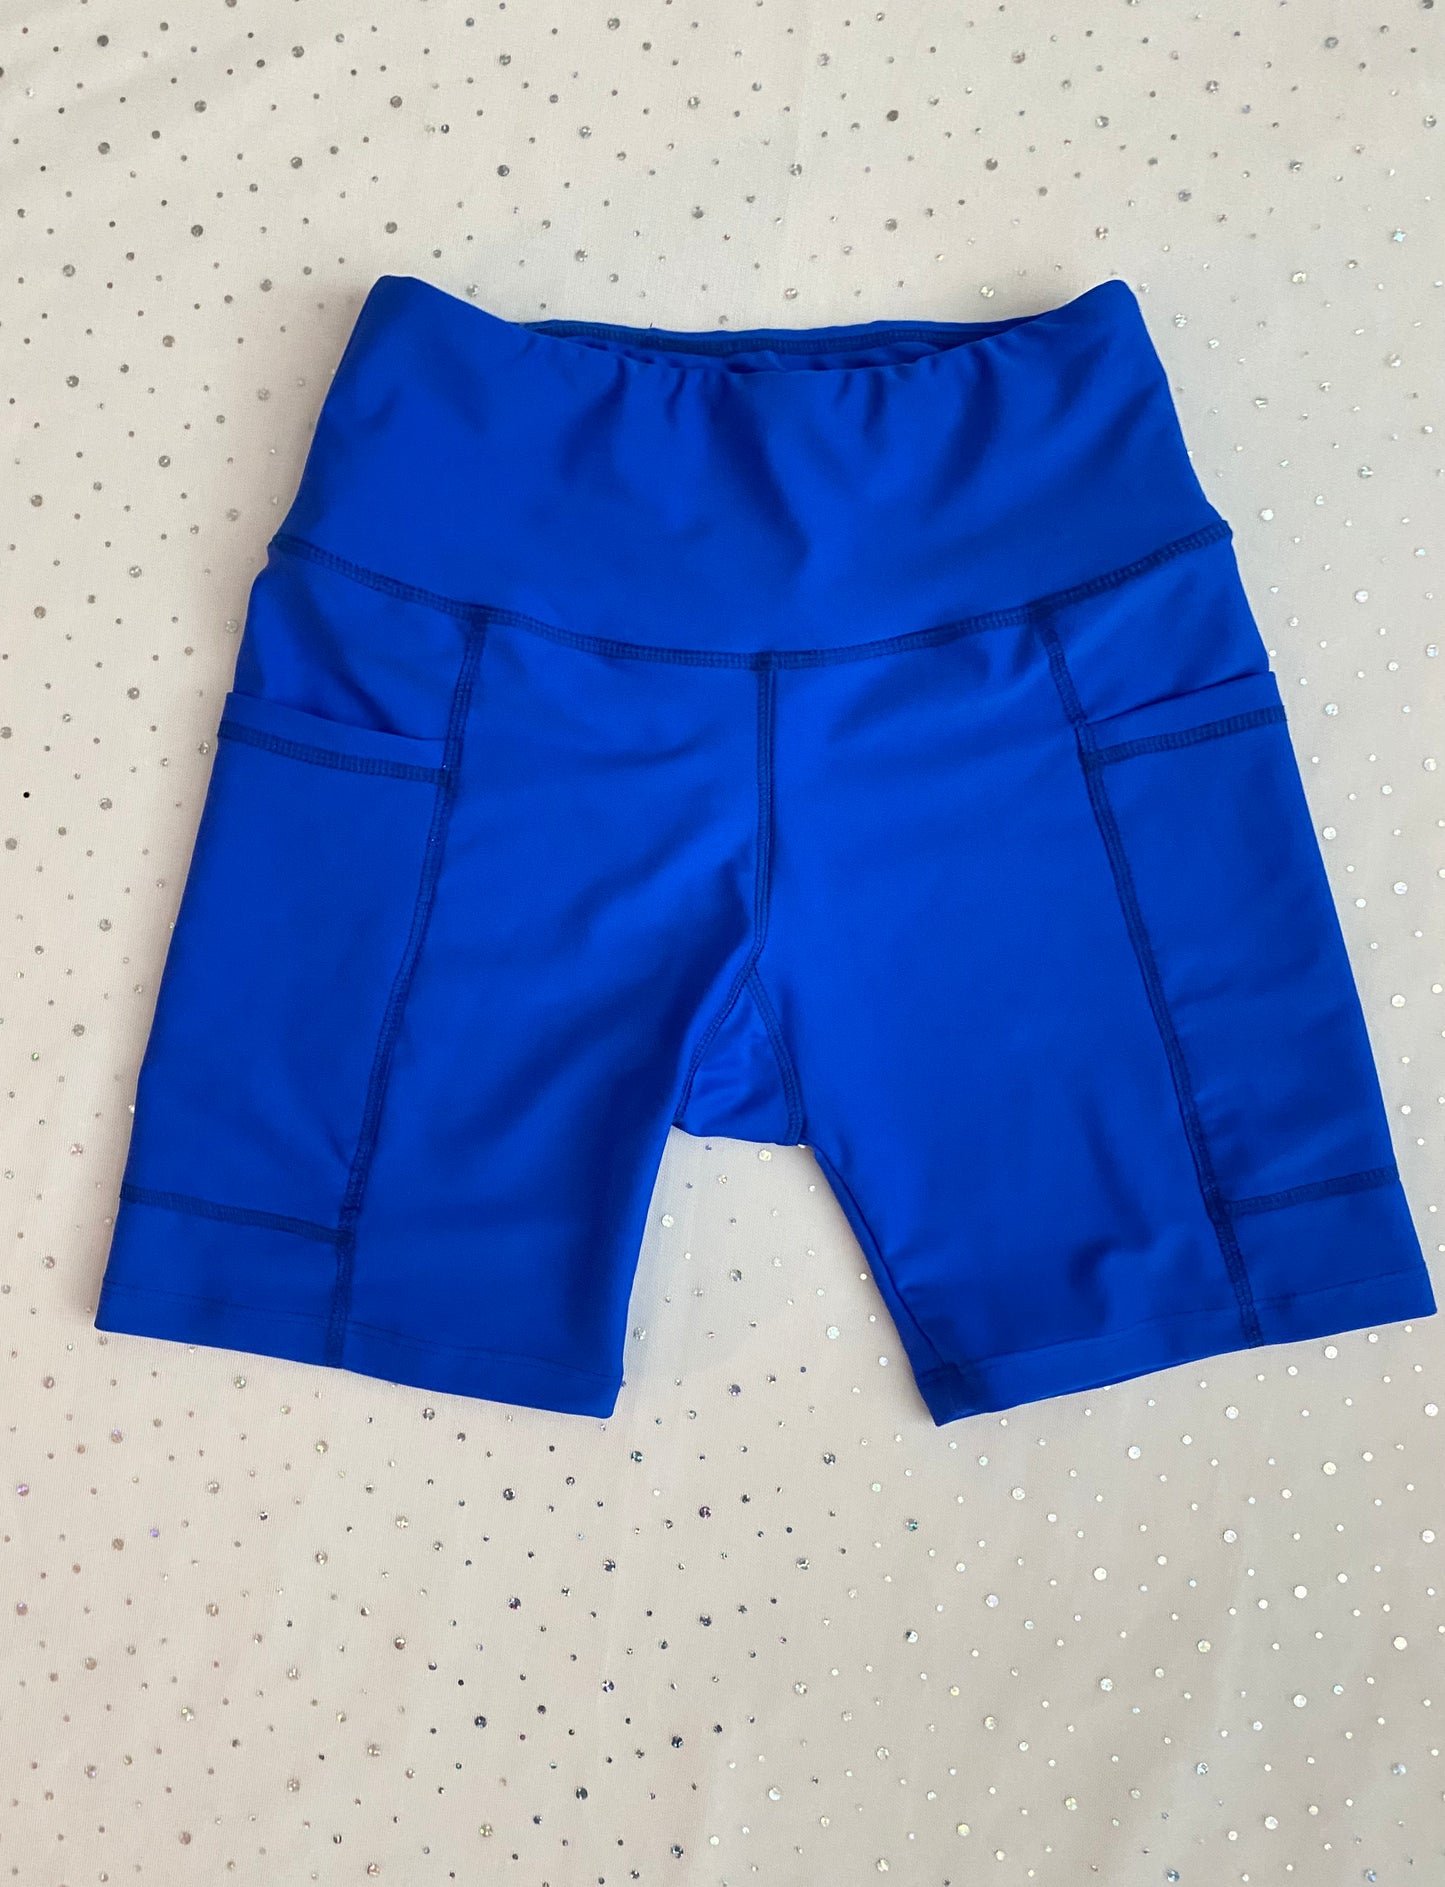 Custom shorts 5" inseam